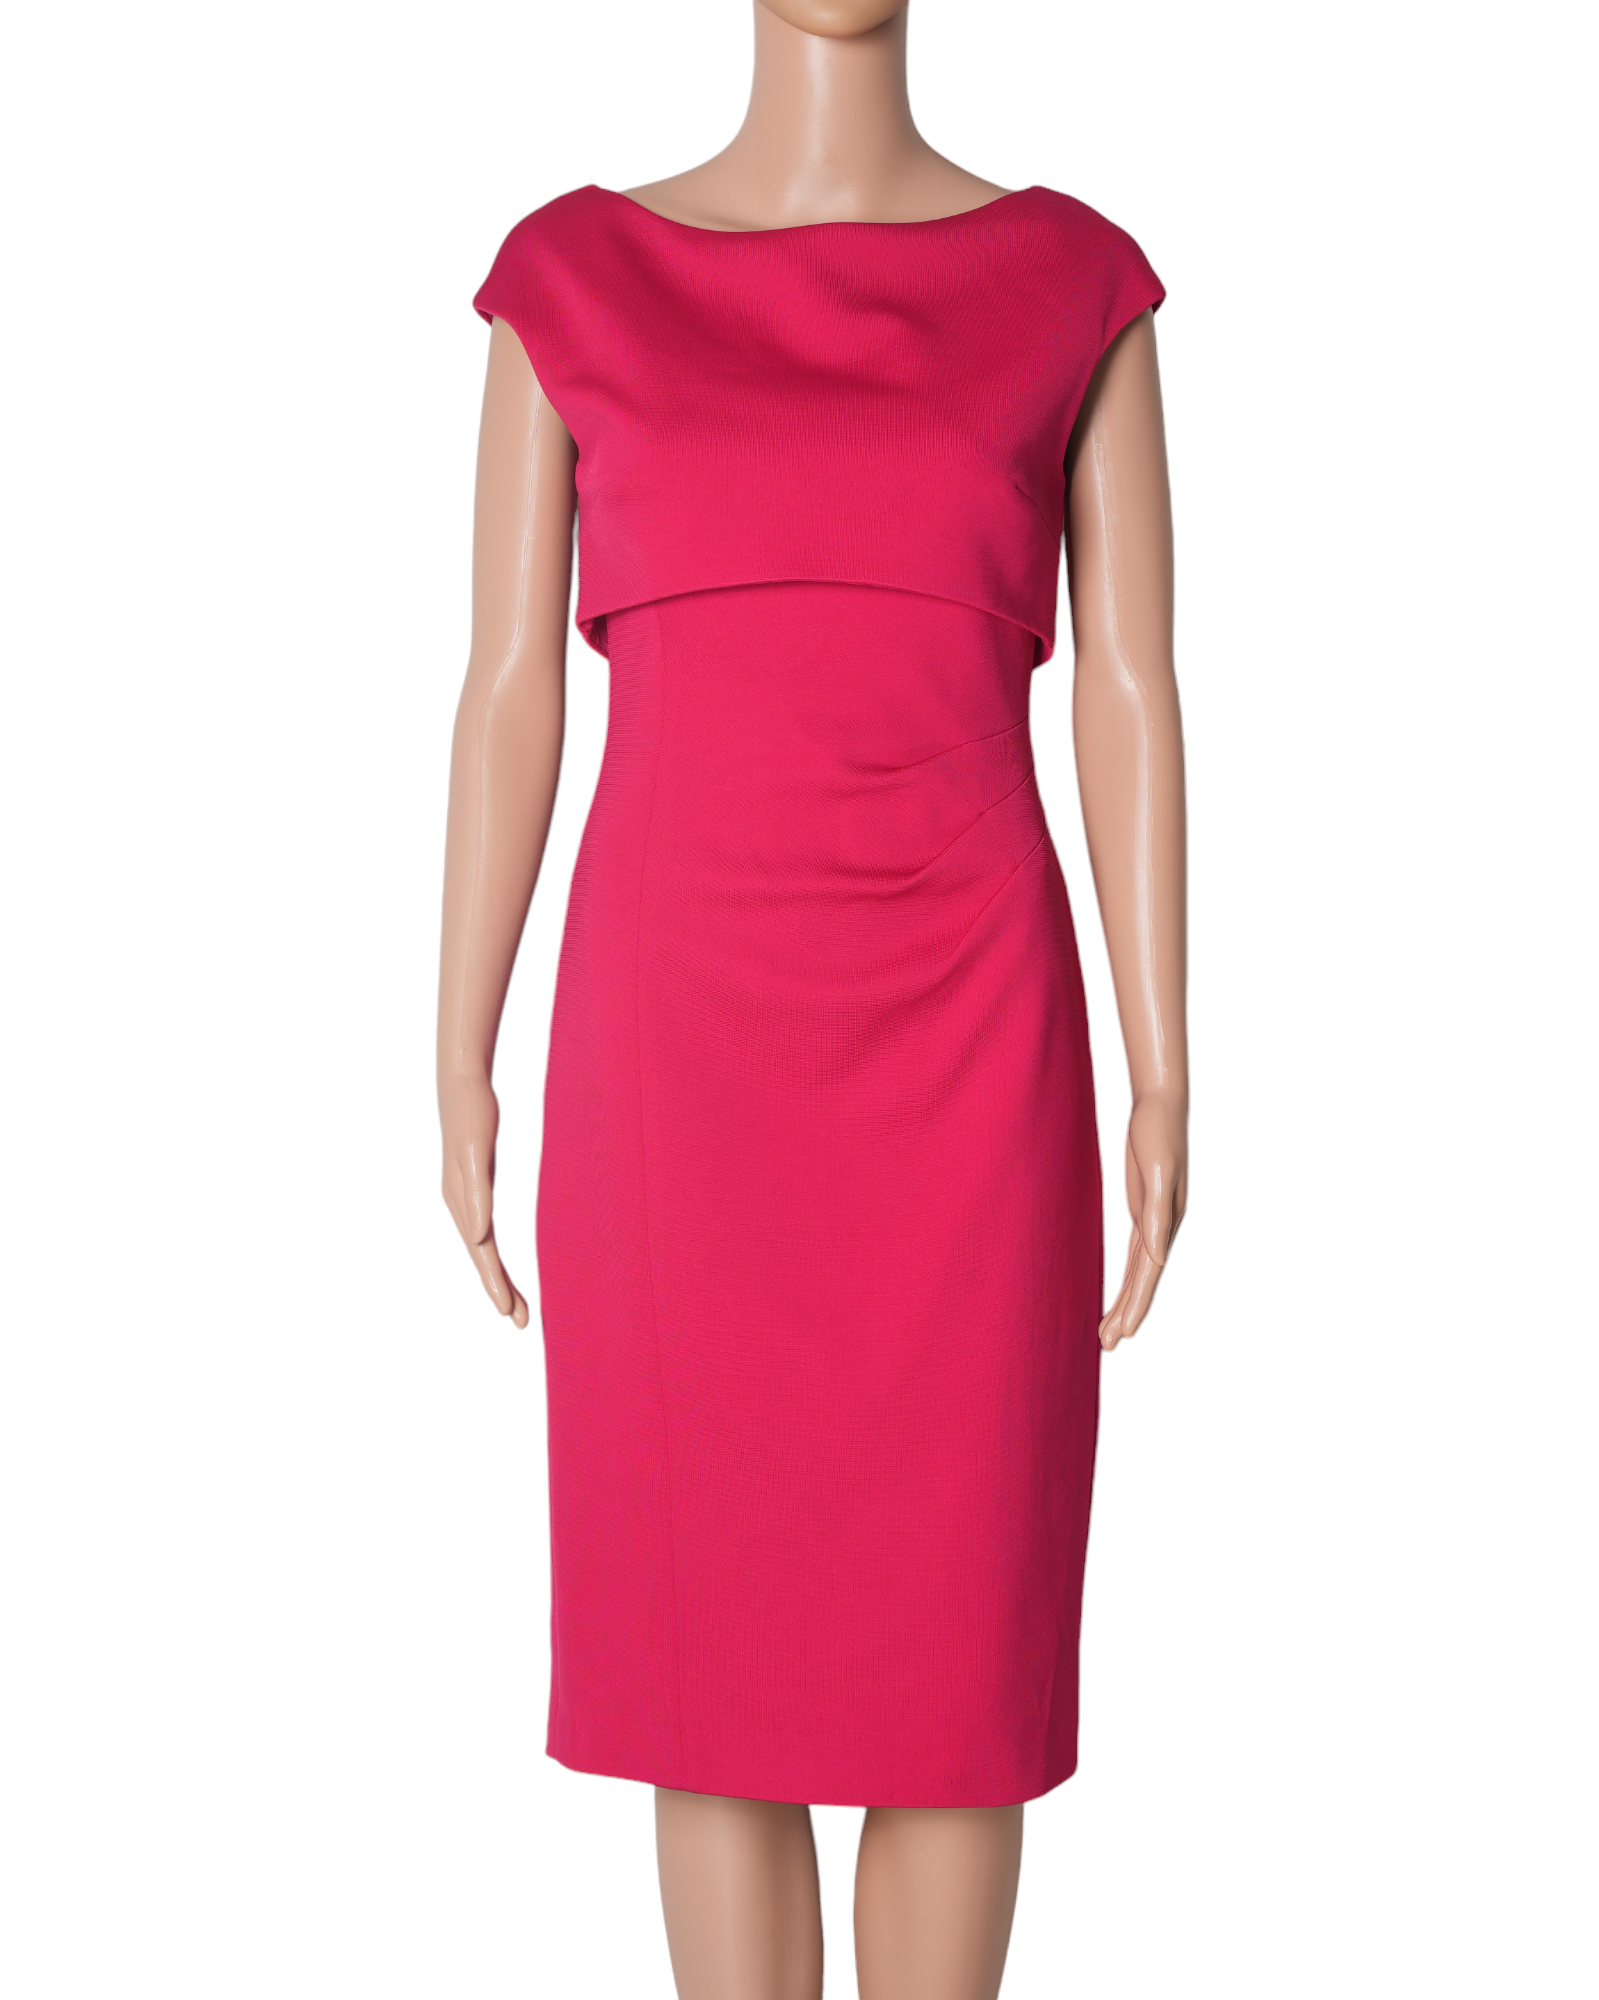 Karen Millen Pink Dress